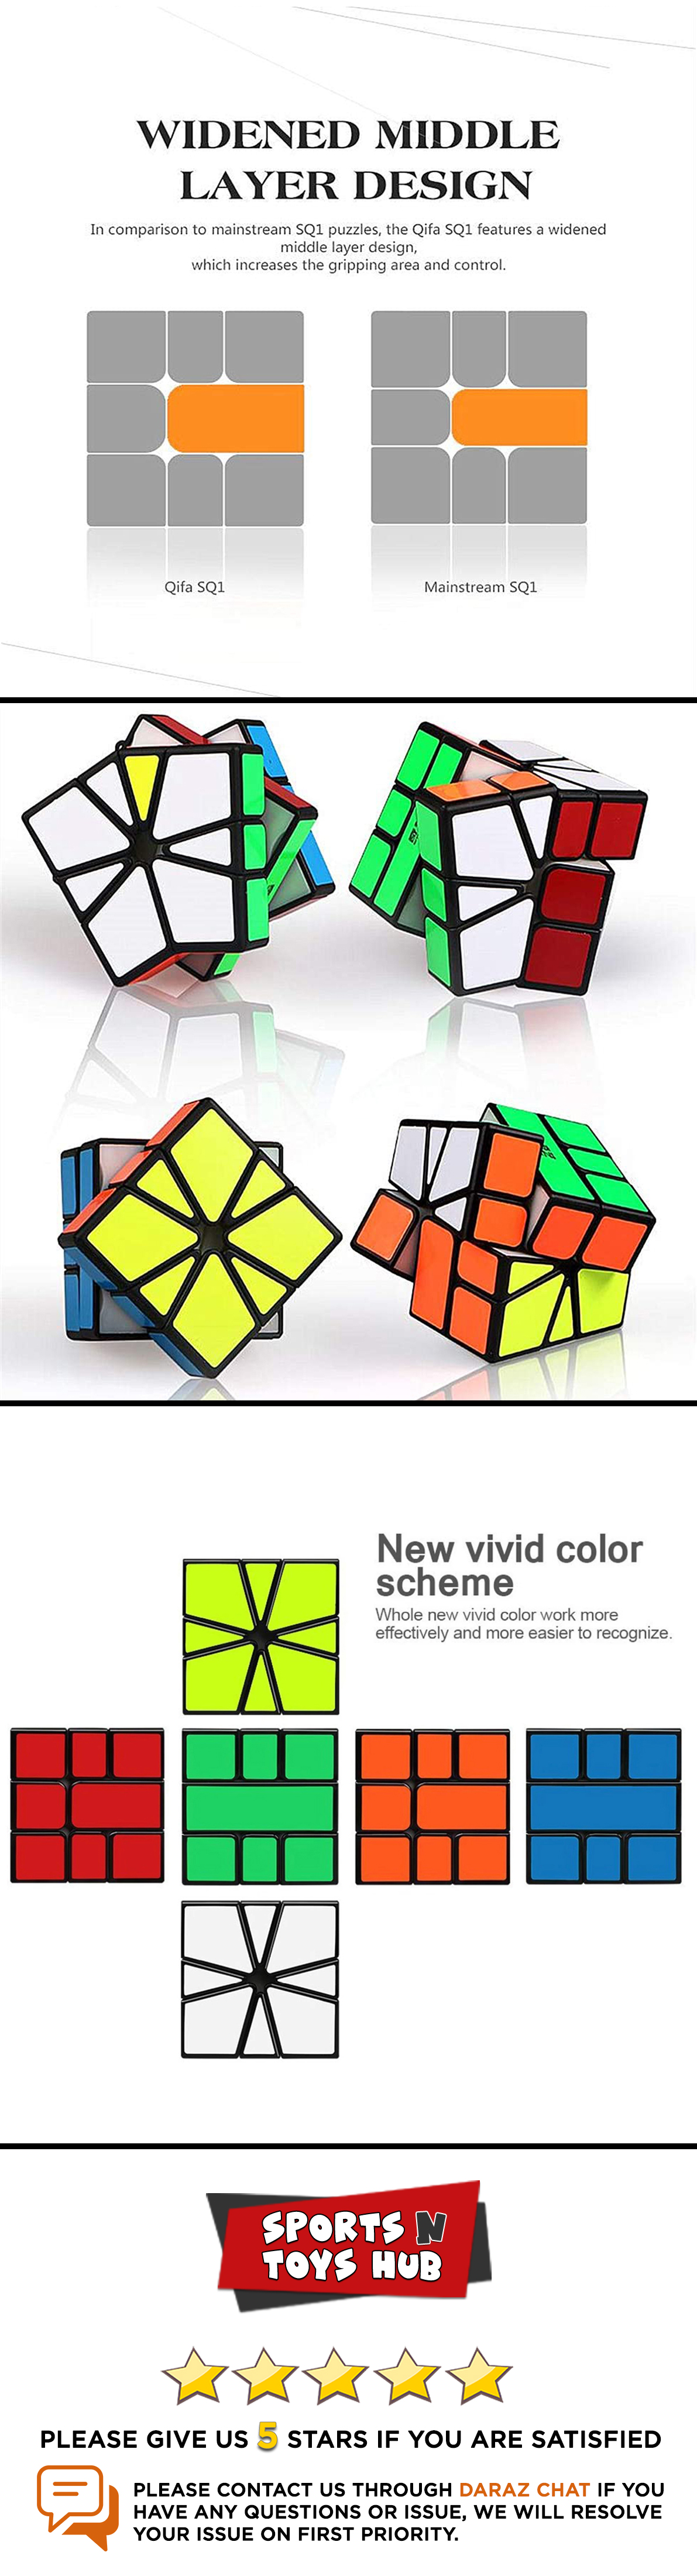 CuberSpeed QiYi Square one Black Magic Cube Qifa SQ 1 Speed Cube Puzzle